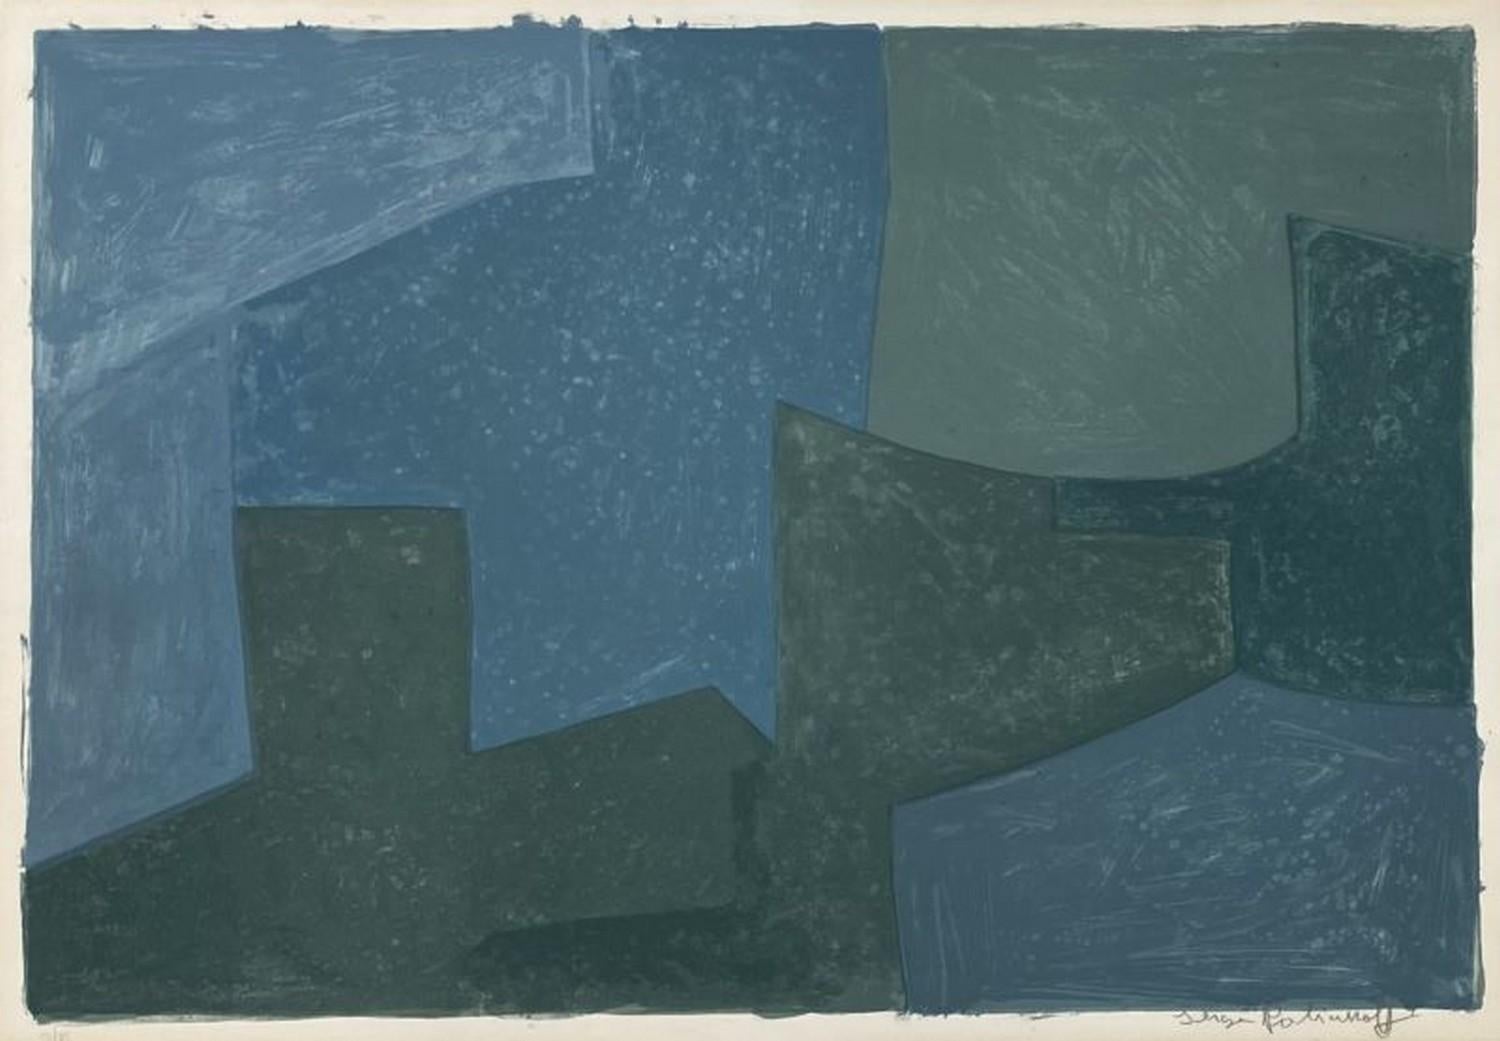 Abstract Print Serge Poliakoff - Composition en bleu et vert n°52 